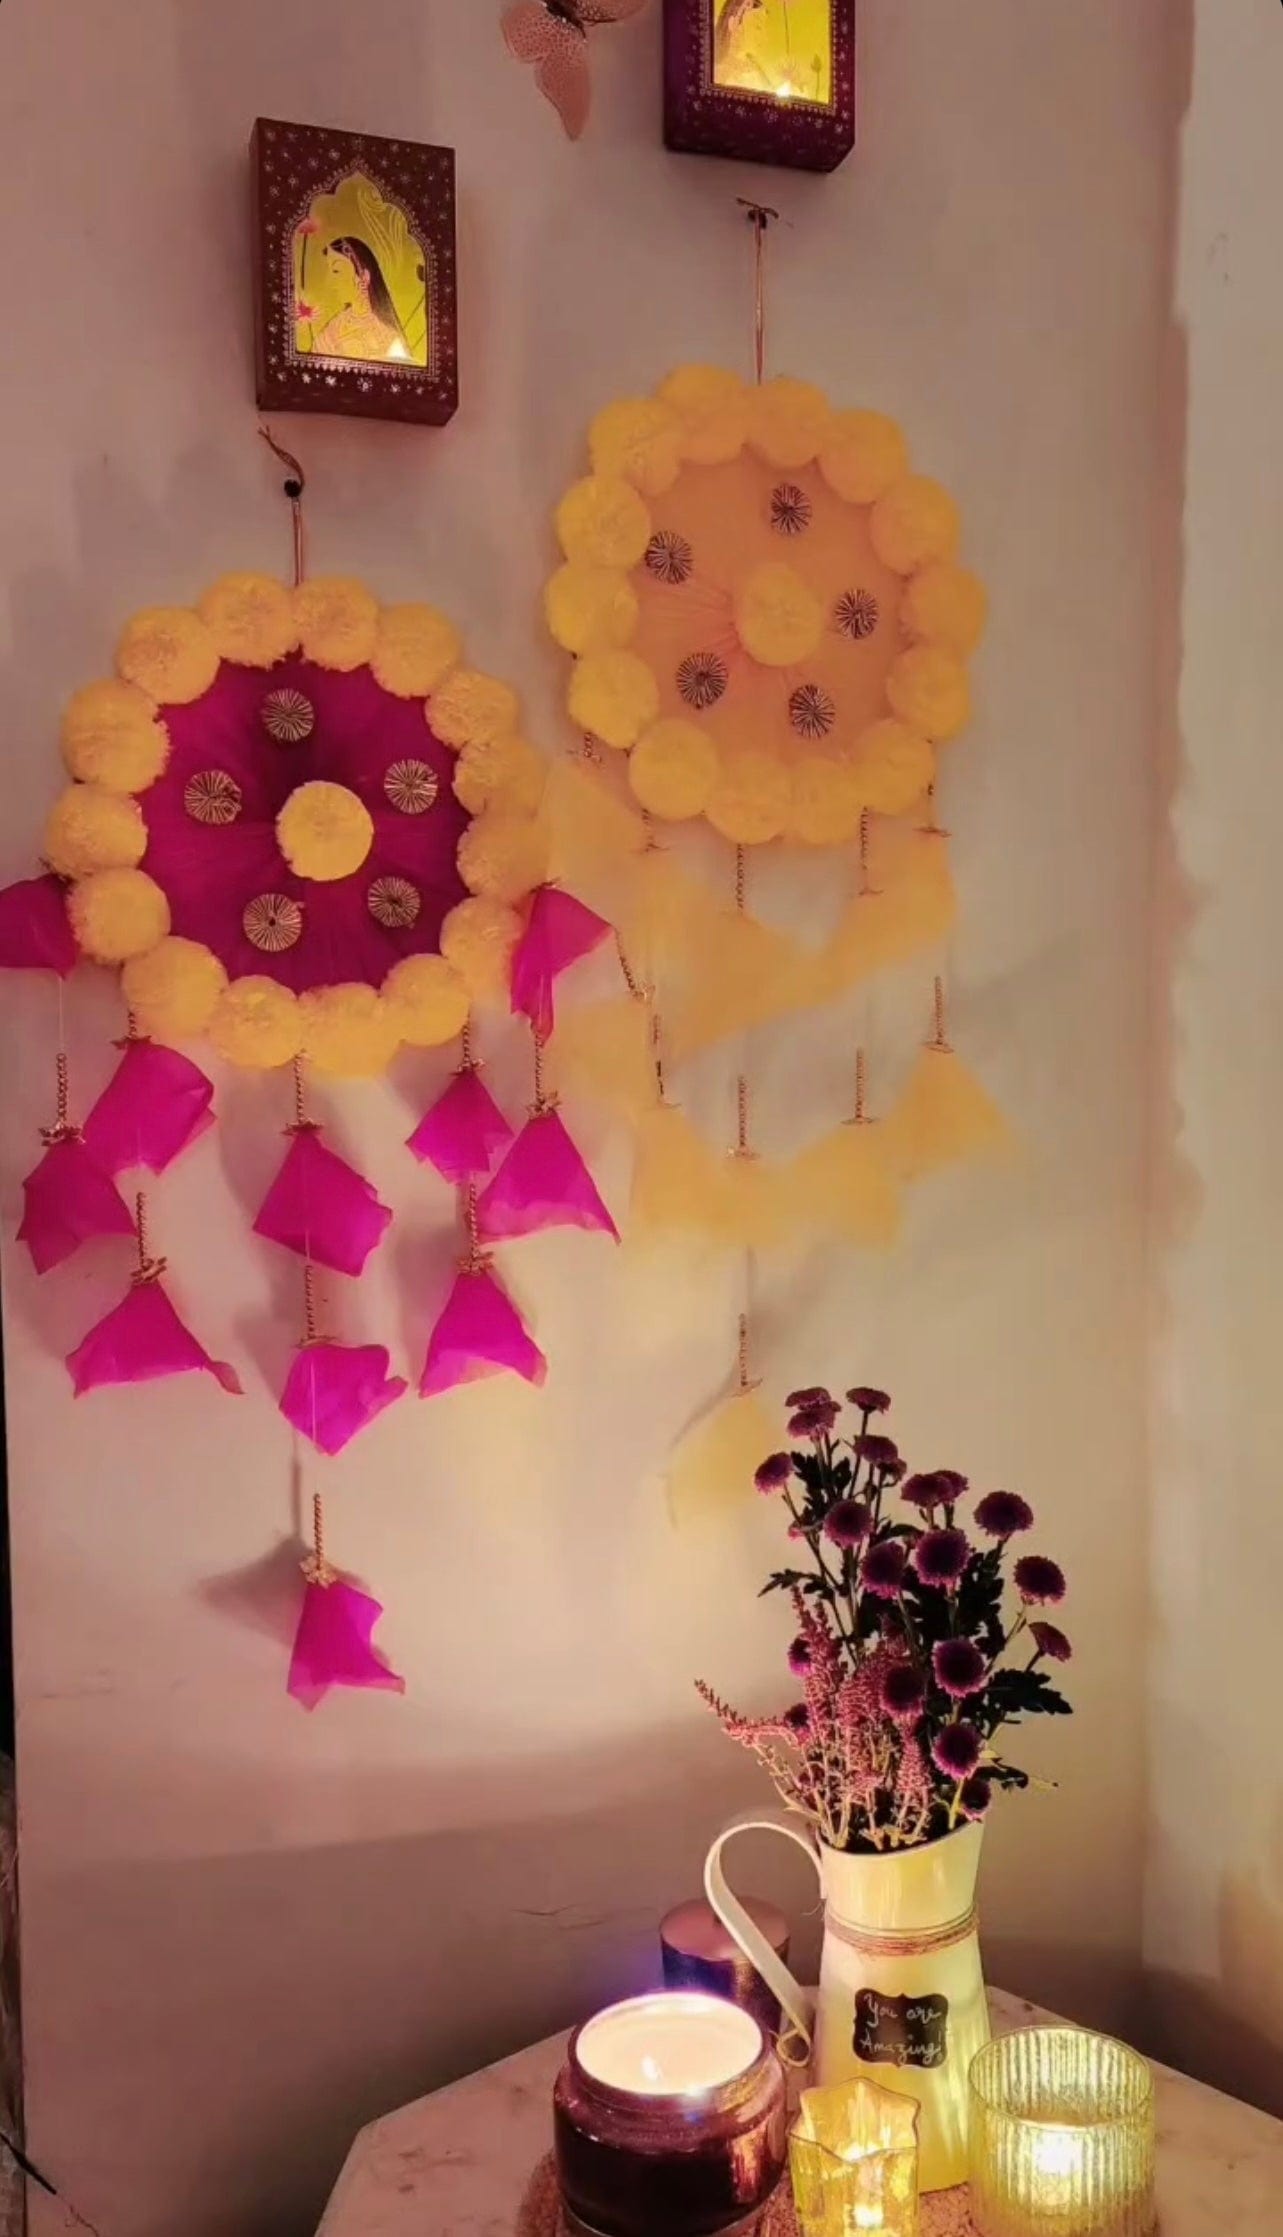 140 Rs each🏷in bulk genda net hanging LAMANSH® Decorative Marigold Flowers & Net Latkan Hangings for Backdrop decoration